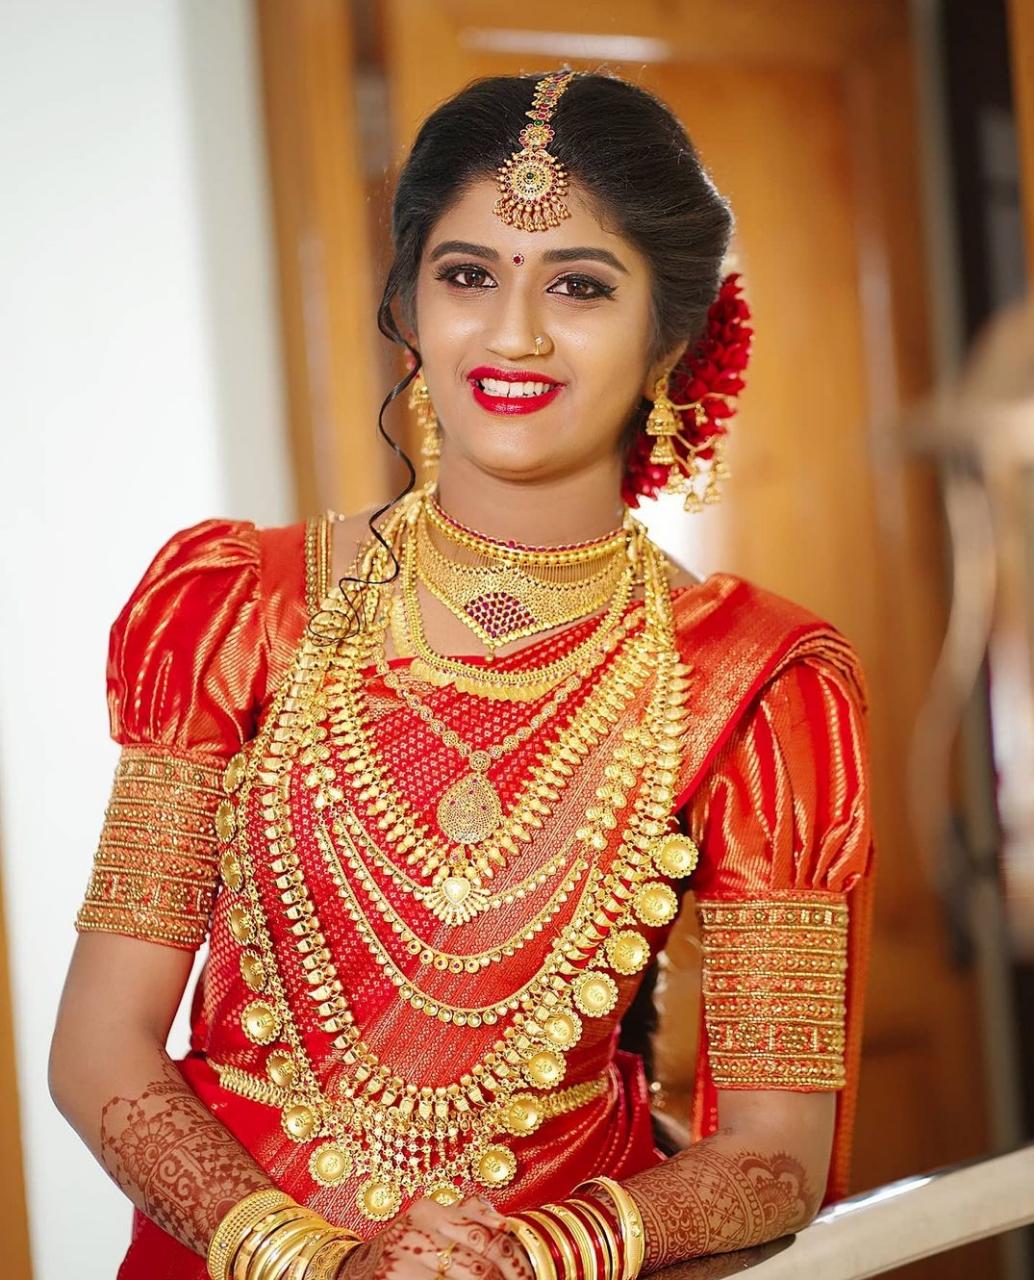 Indian wedding hindu bride traditional portrait | Photo 9162